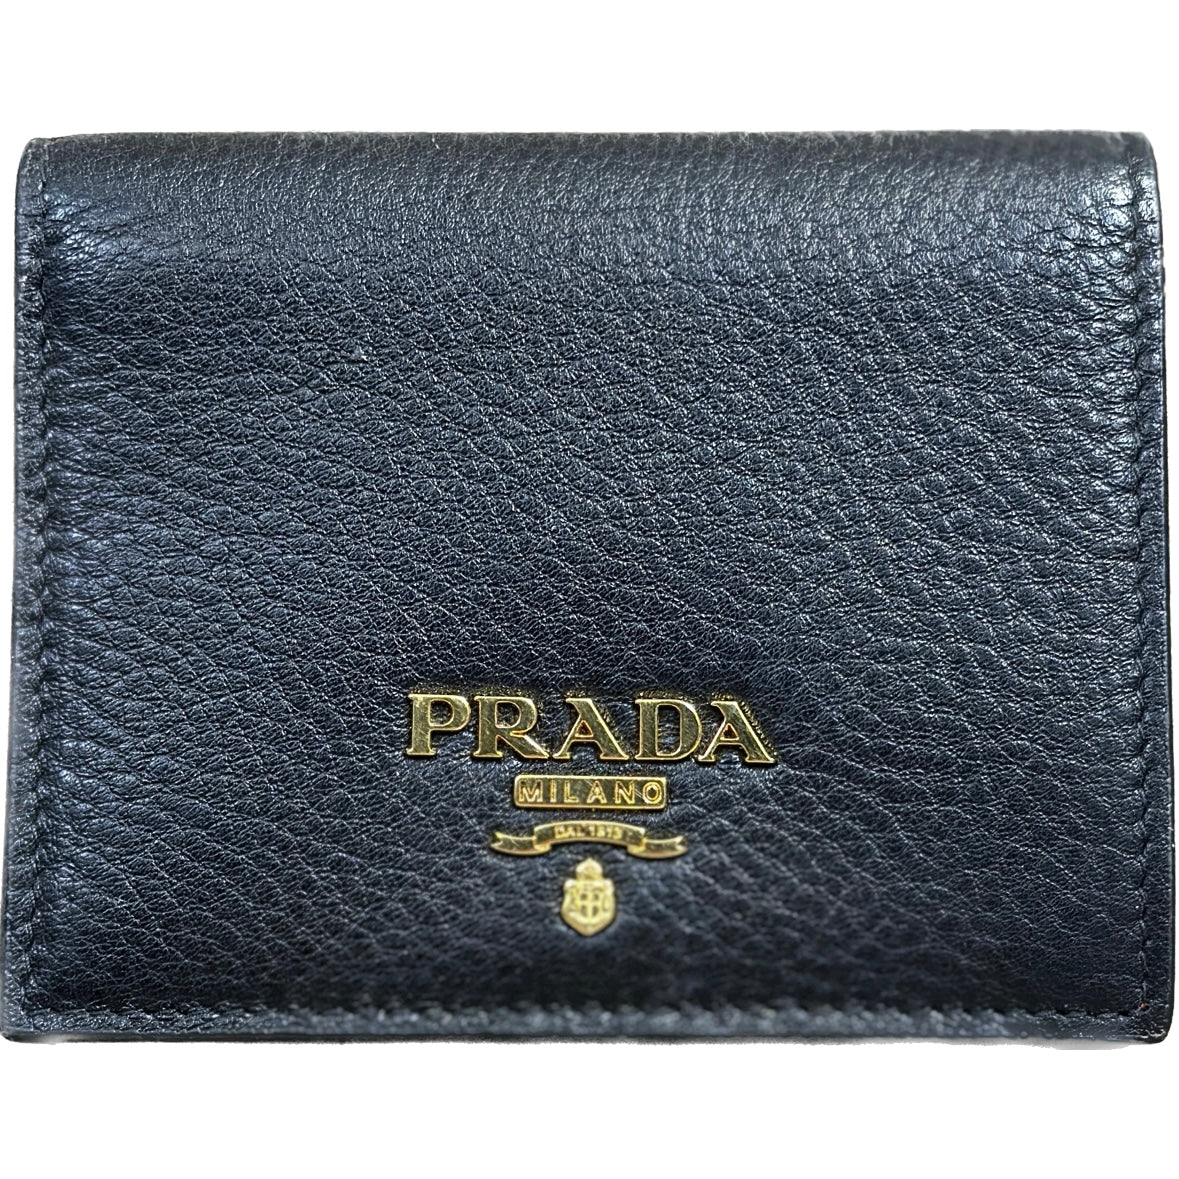 Prada Authenticated Leather Purse